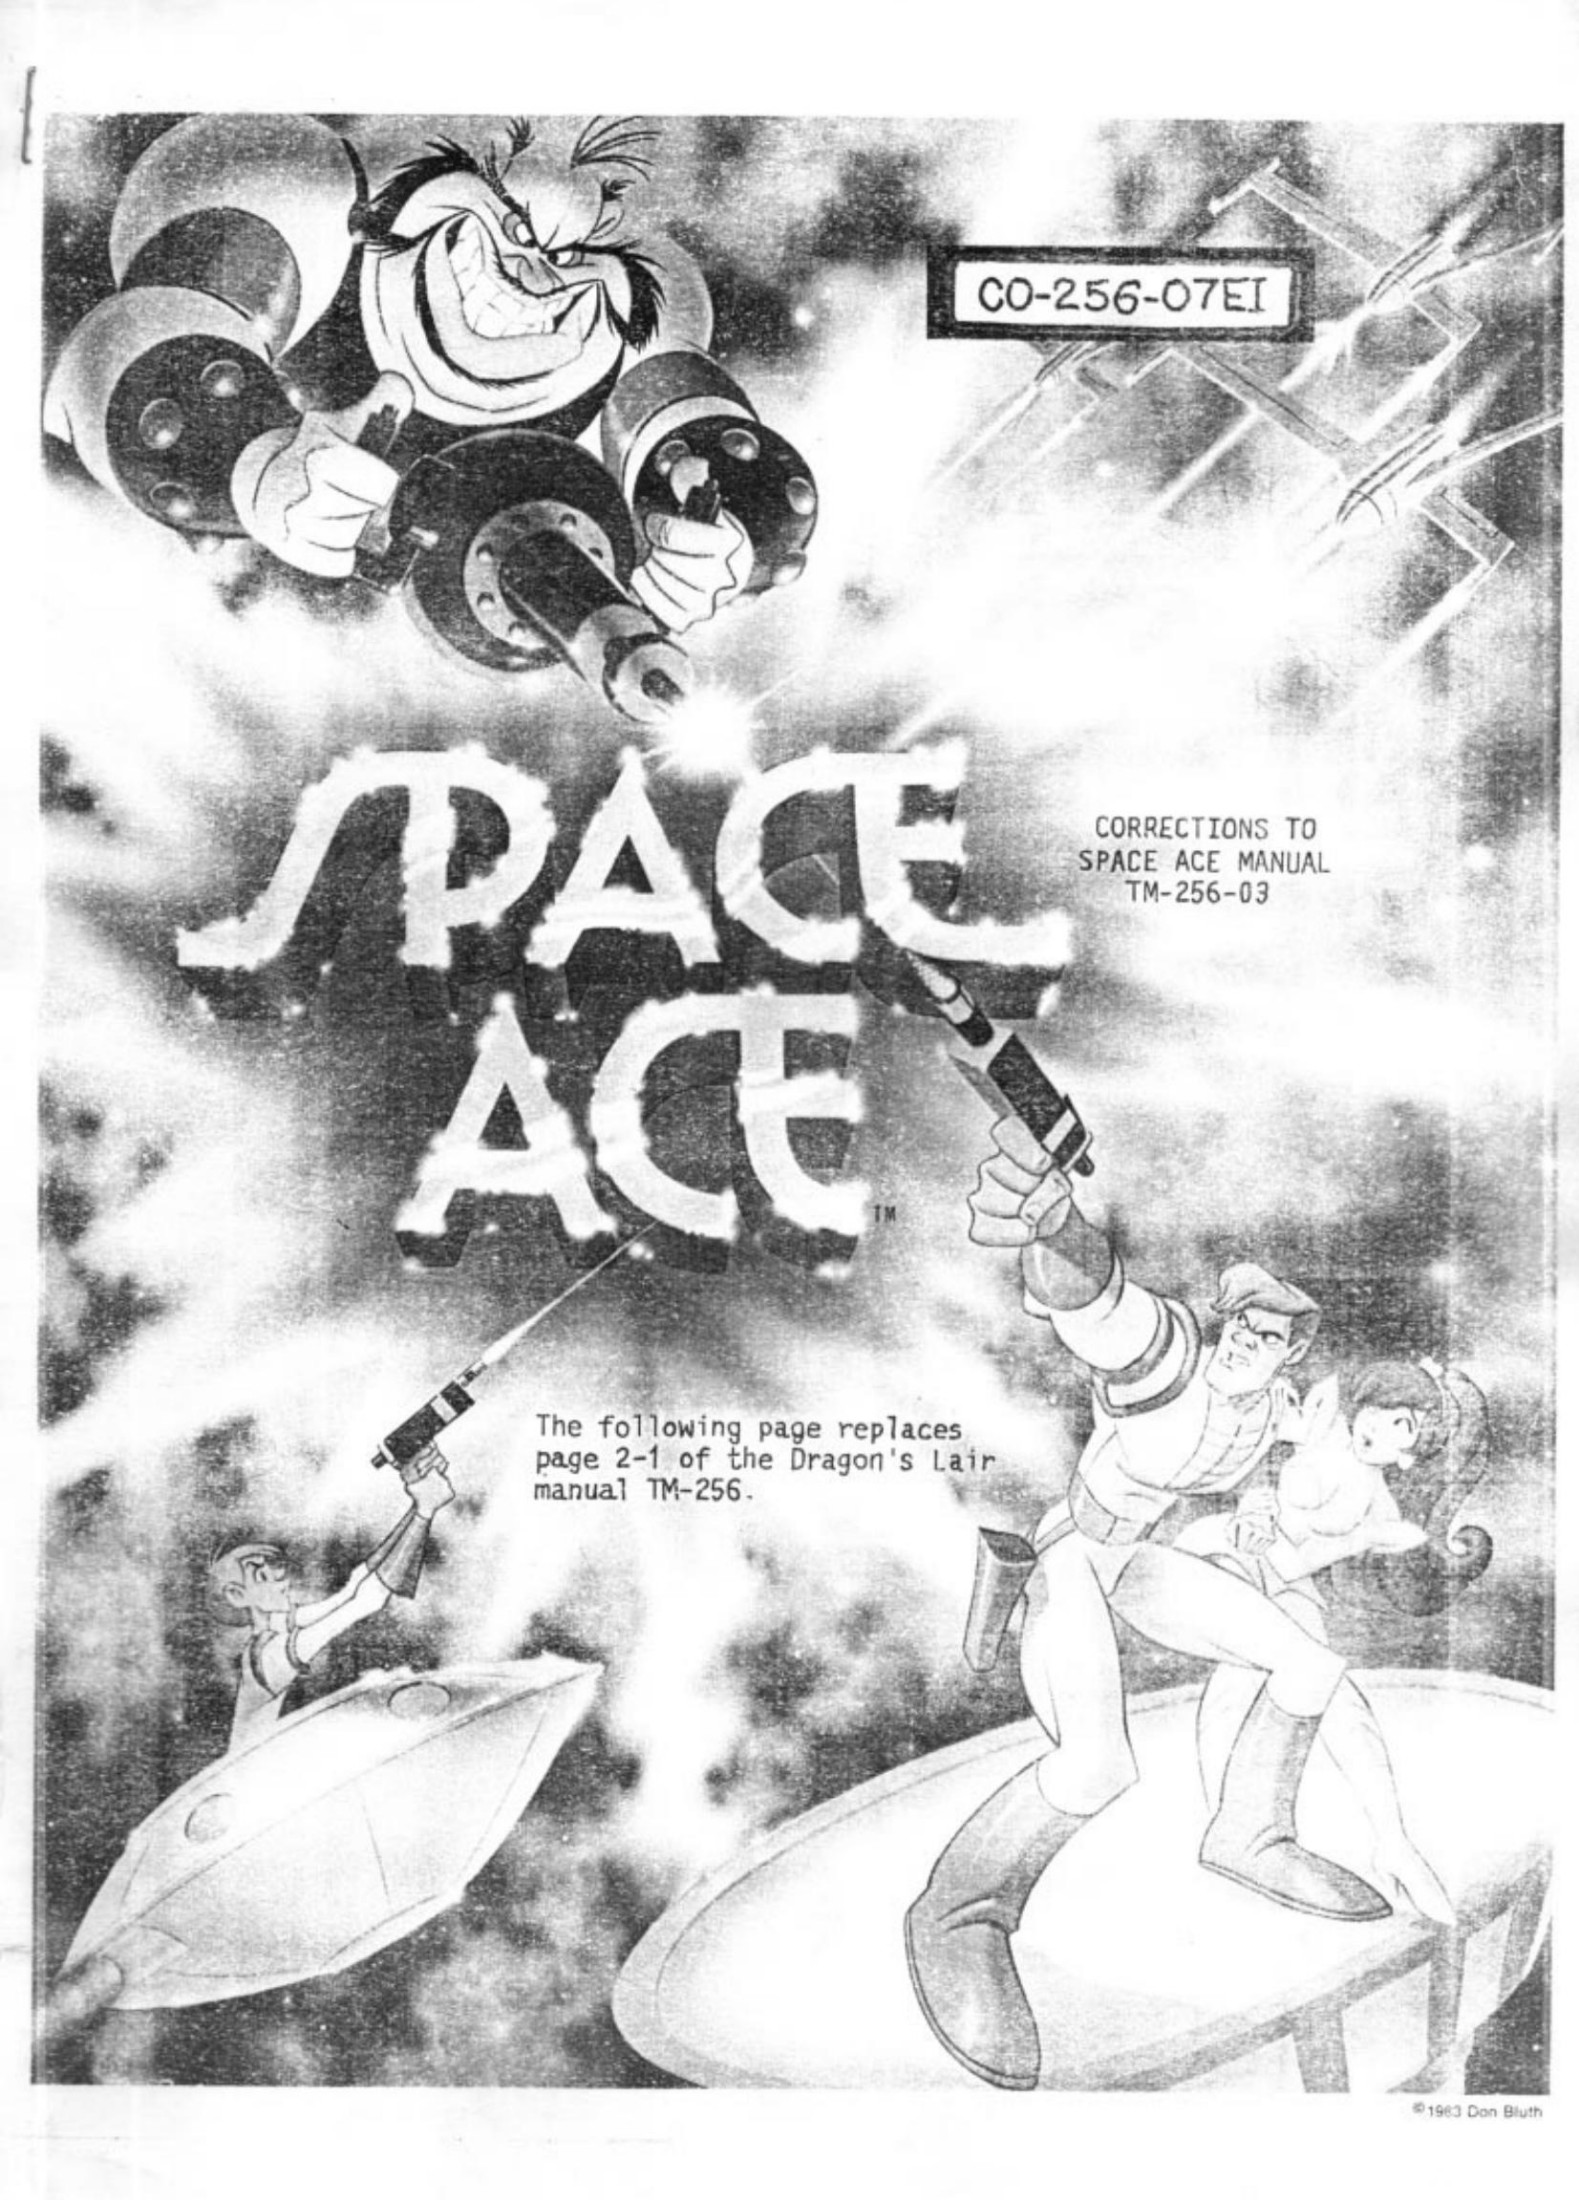 Space Ace euro manual